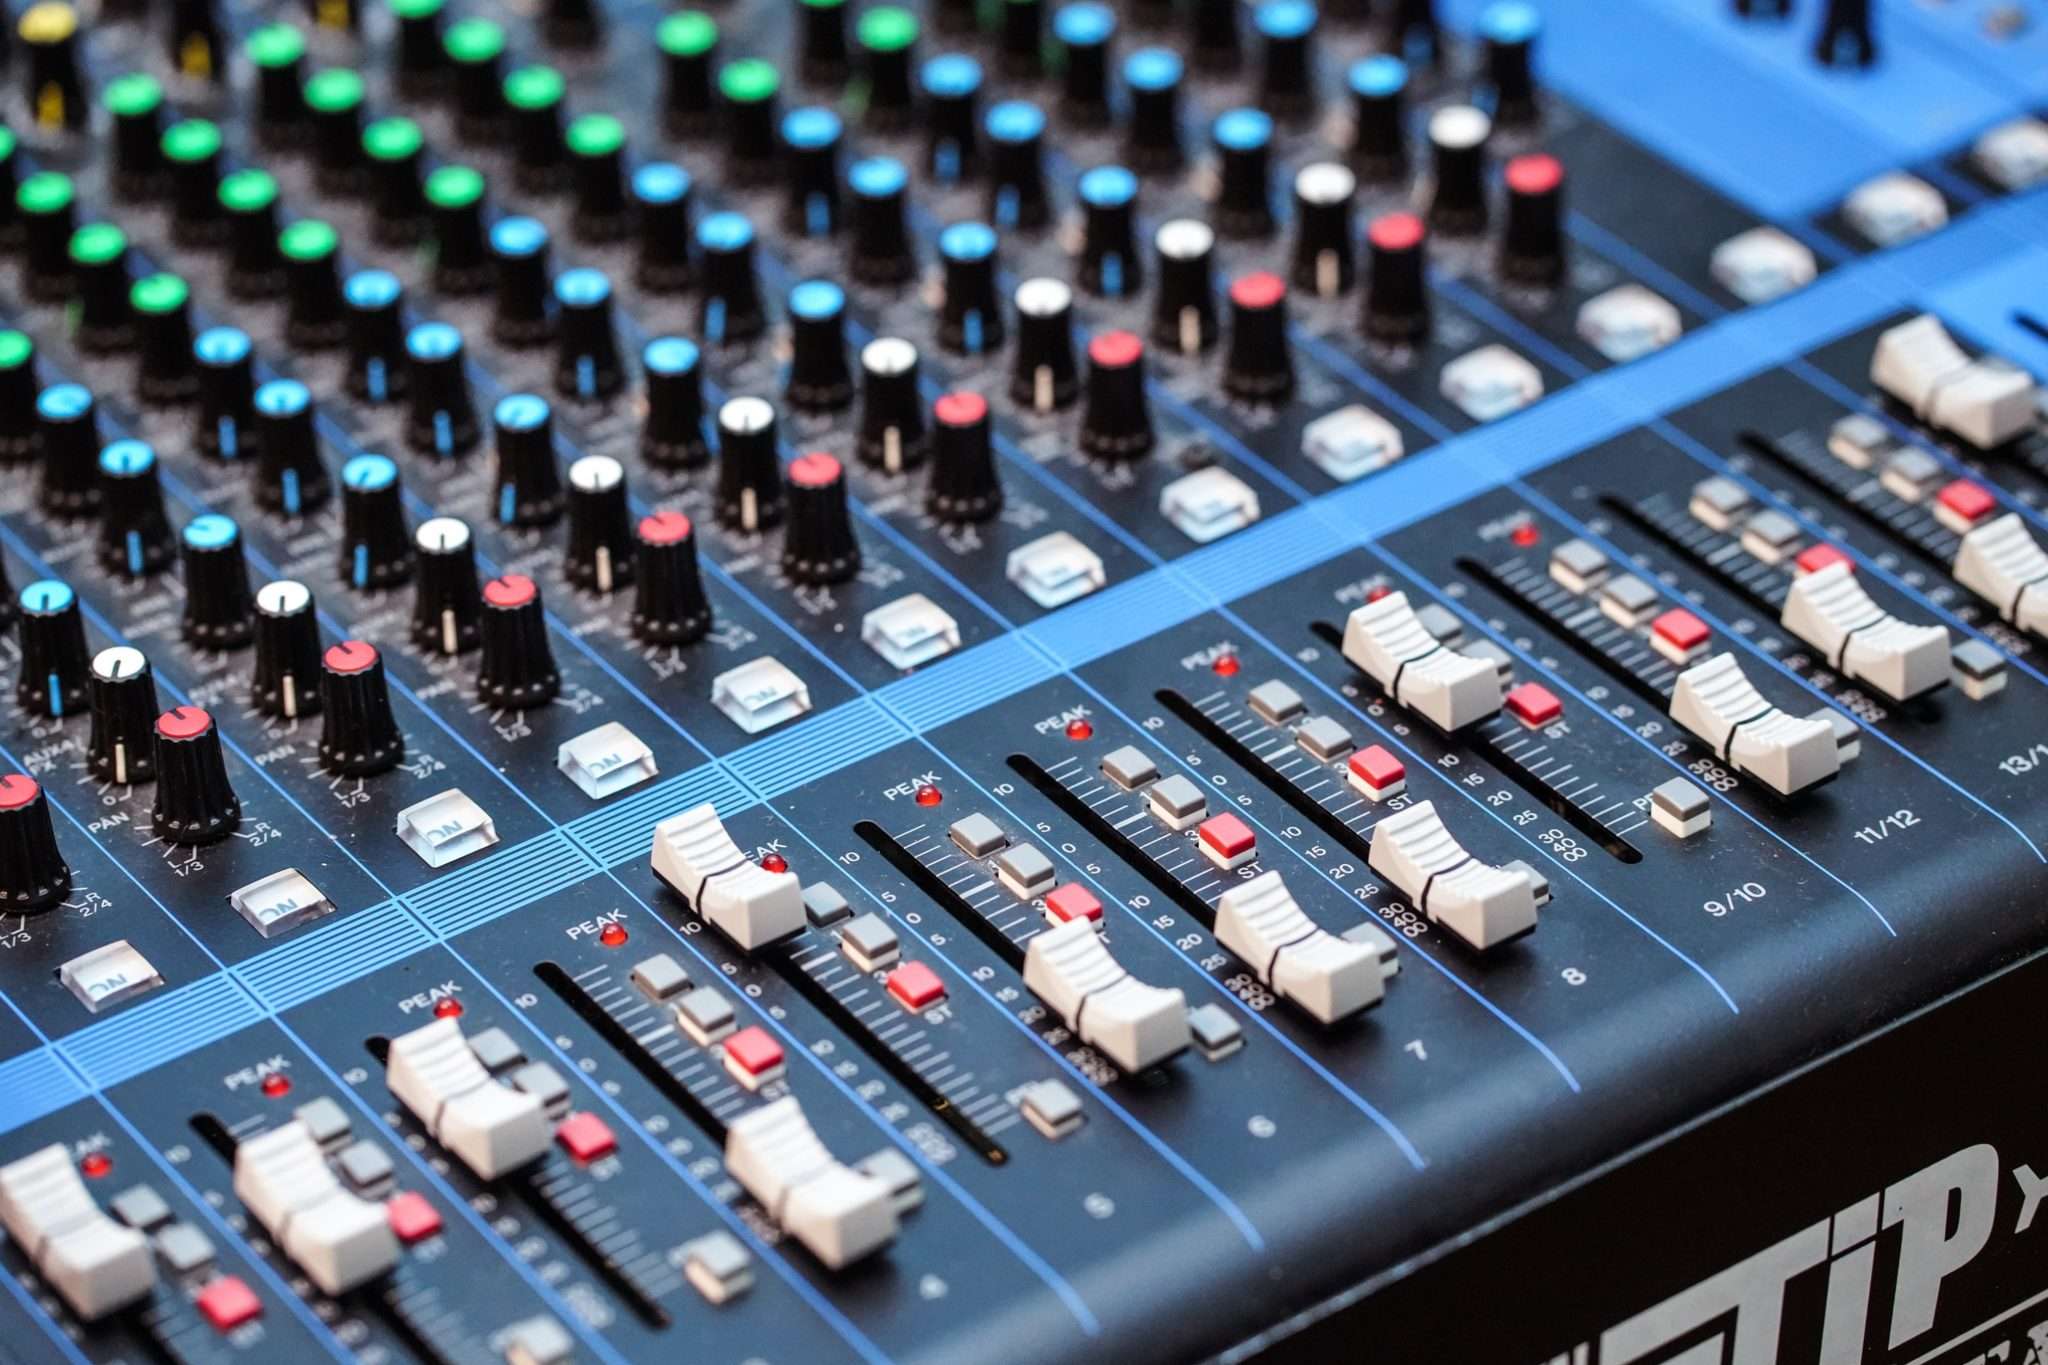 Image of Audio Mixer Board